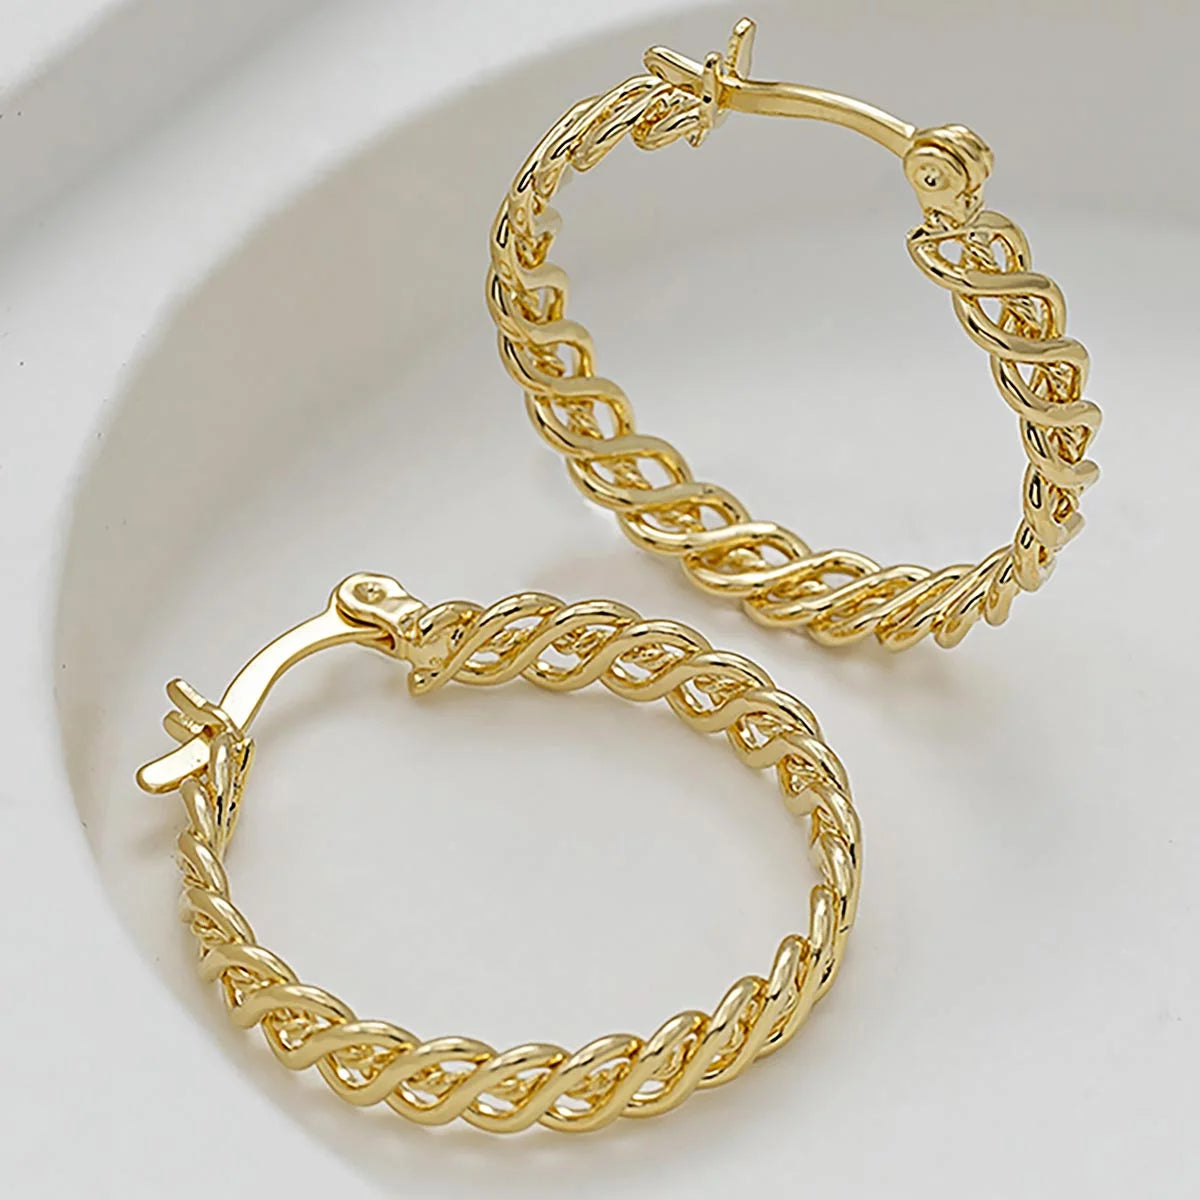 Candongas de oro laminado18K estilo Chain 3.8 cm Ref 34172